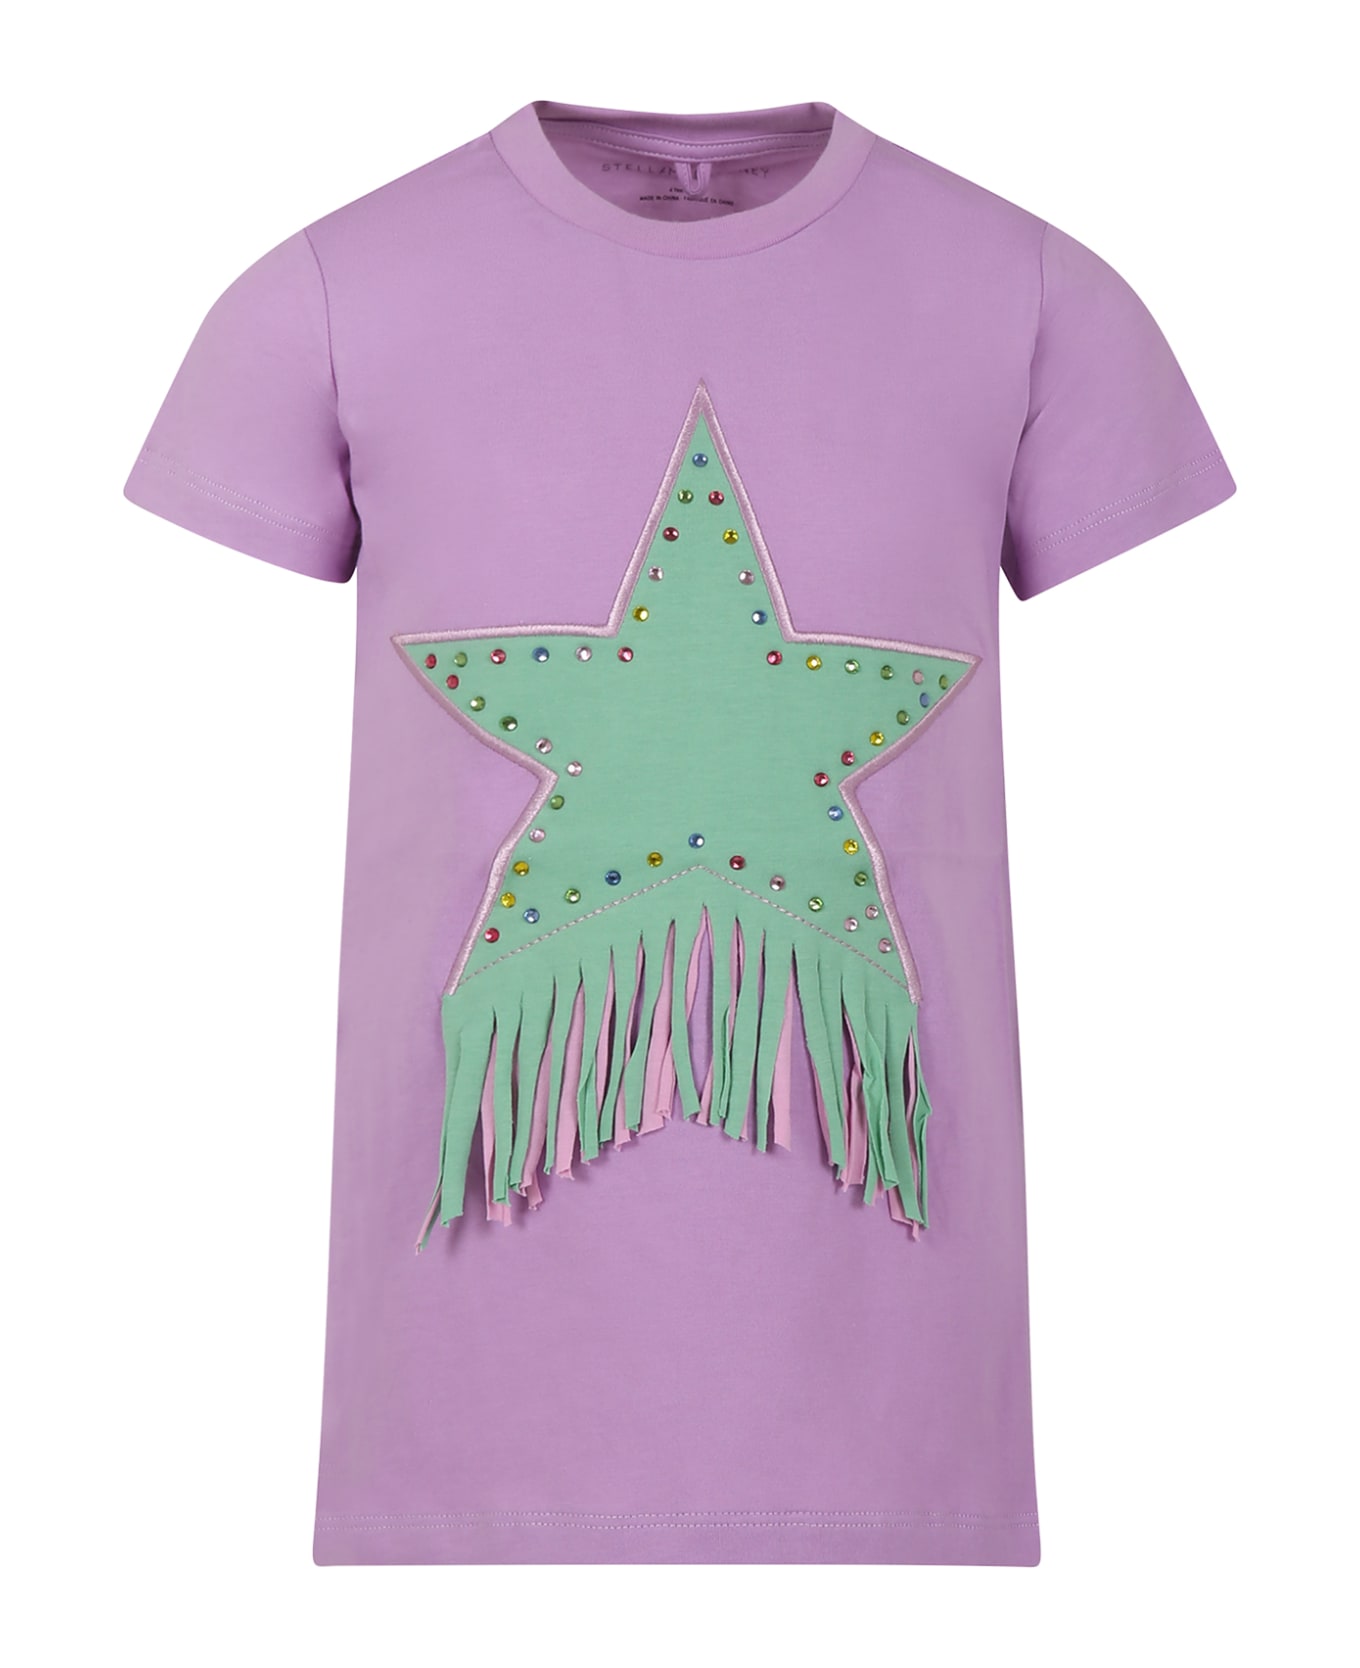 Stella McCartney Kids Purple Dress For Girl With Star - Violet